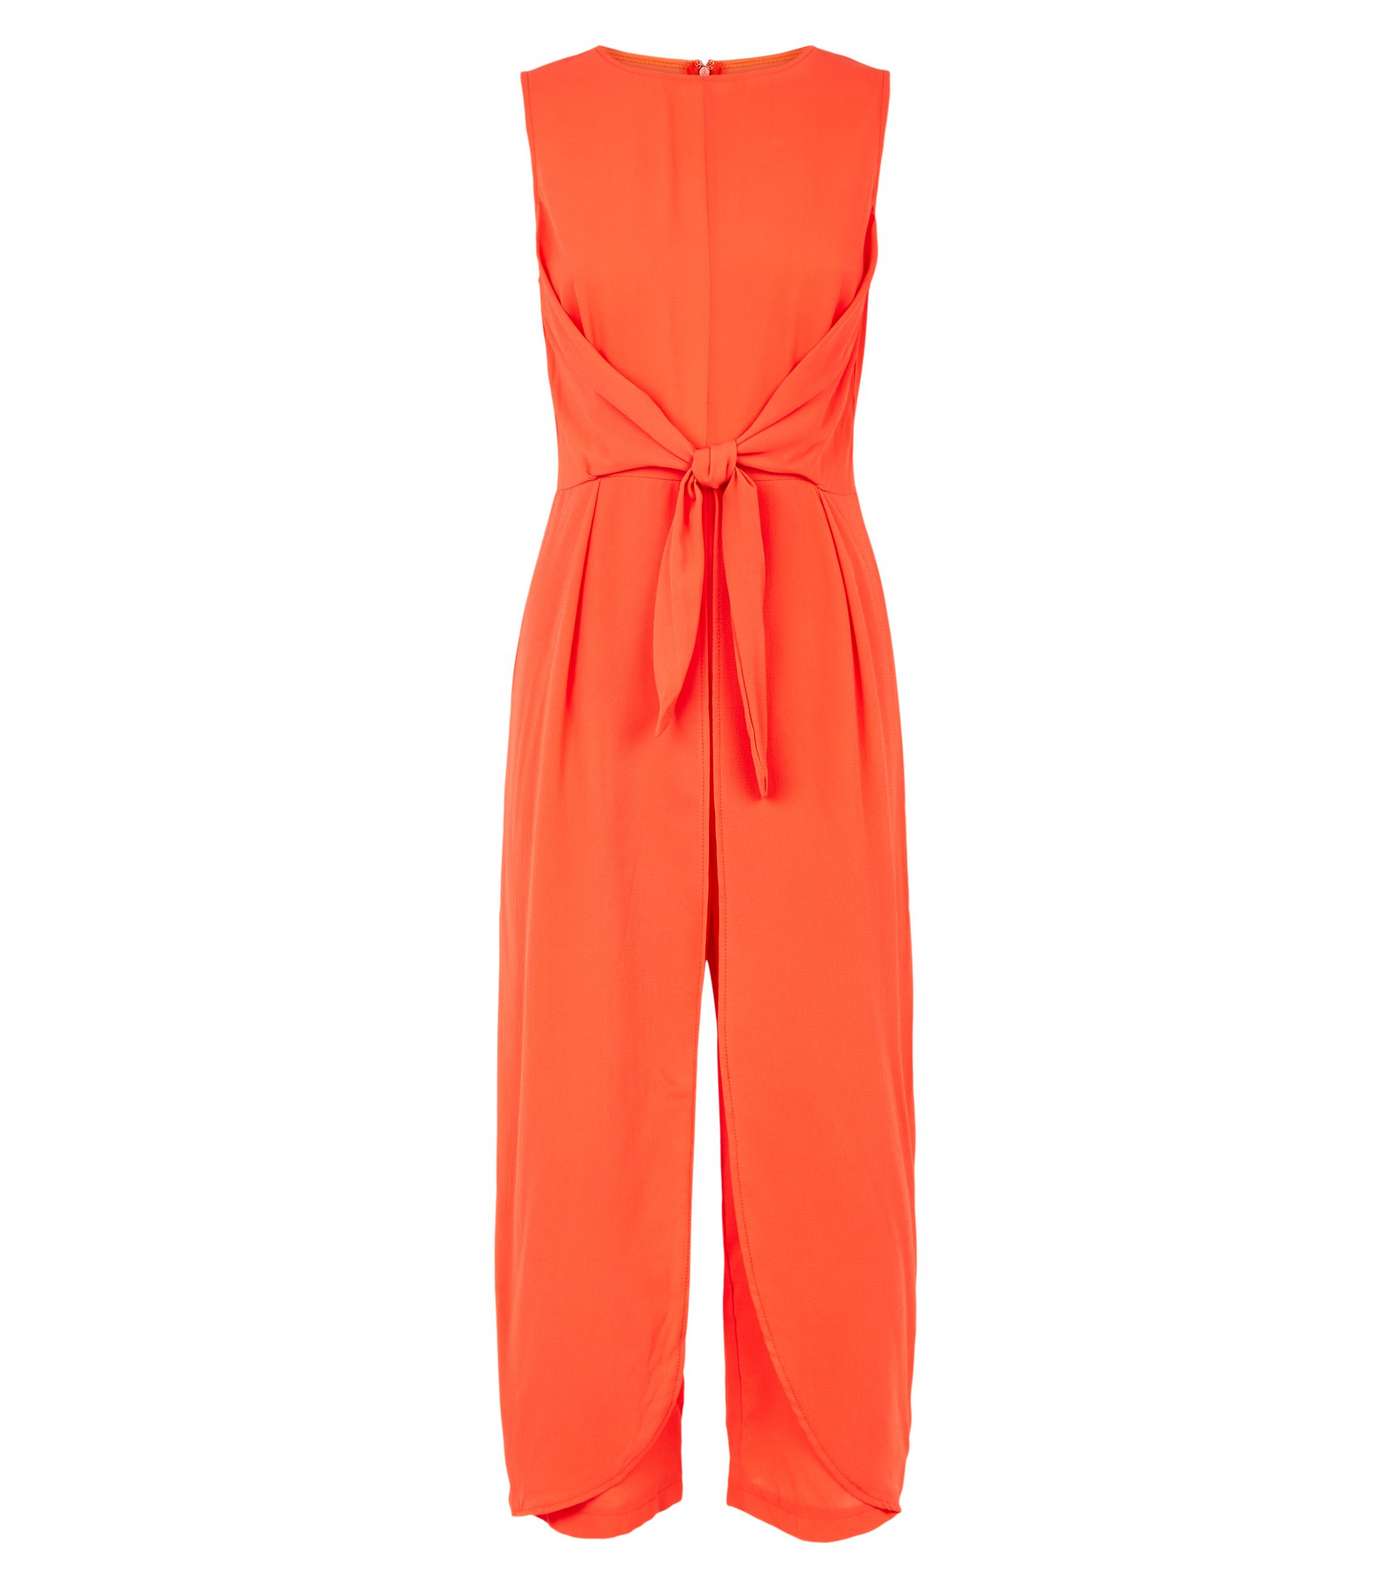 AX Paris Bright Orange Tie Front Crop Jumpsuit Image 4